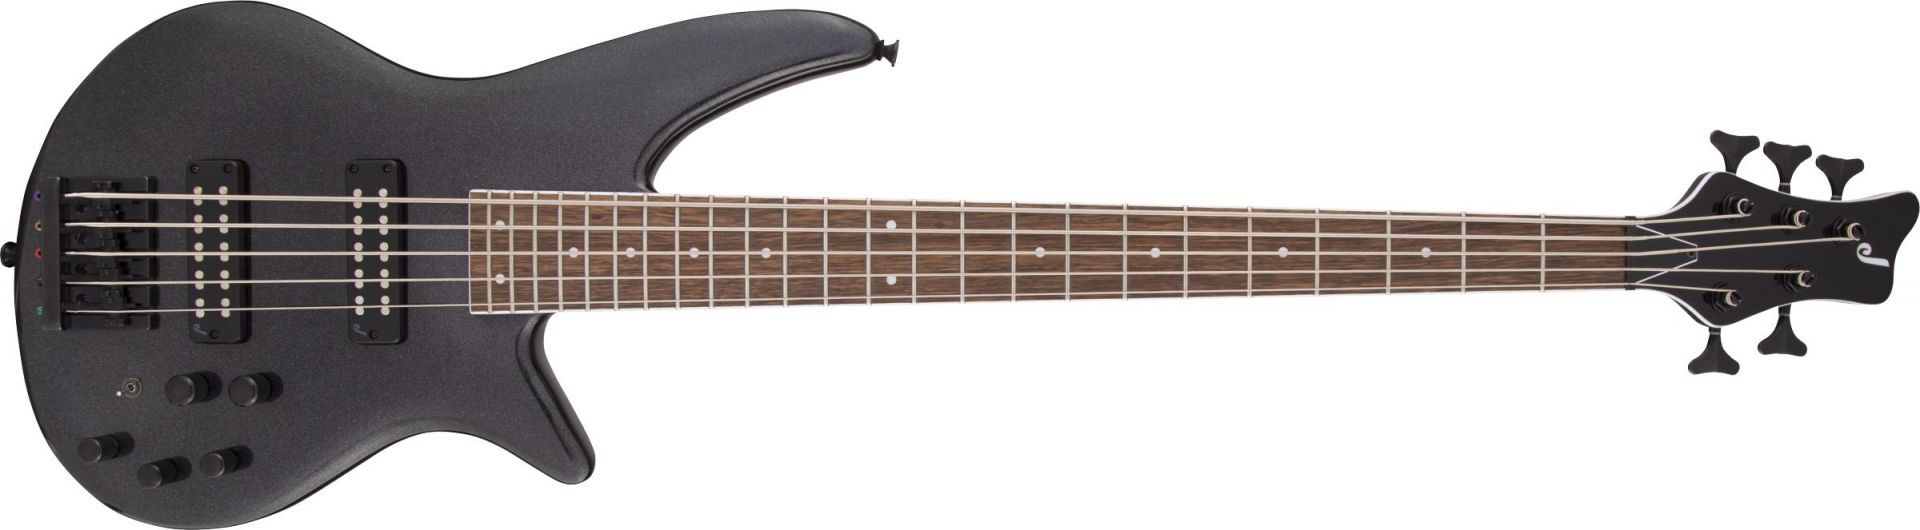 Jackson X Series Spectra Bass SBX V Laurel Fingerboard Metallic Black